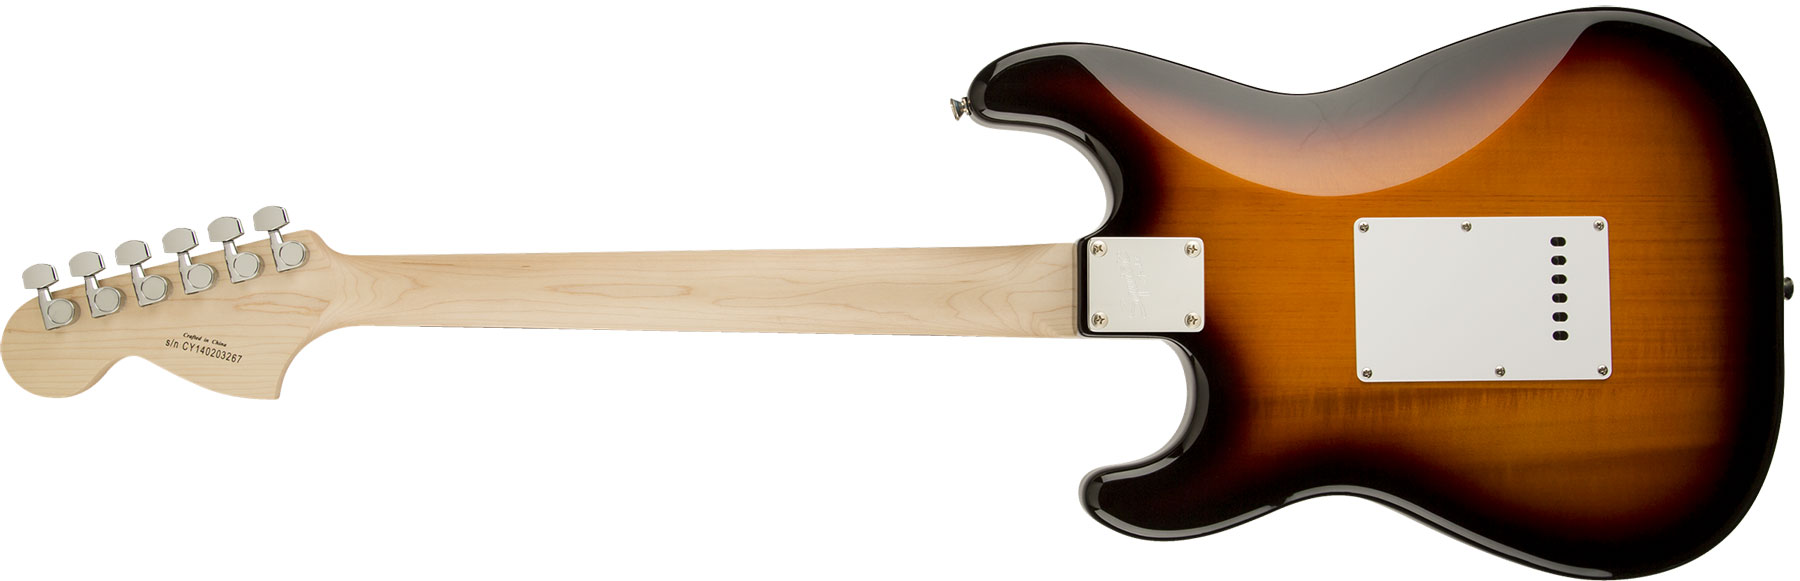 Squier Strat Affinity Series 3s Lau - Brown Sunburst - Str shape electric guitar - Variation 5